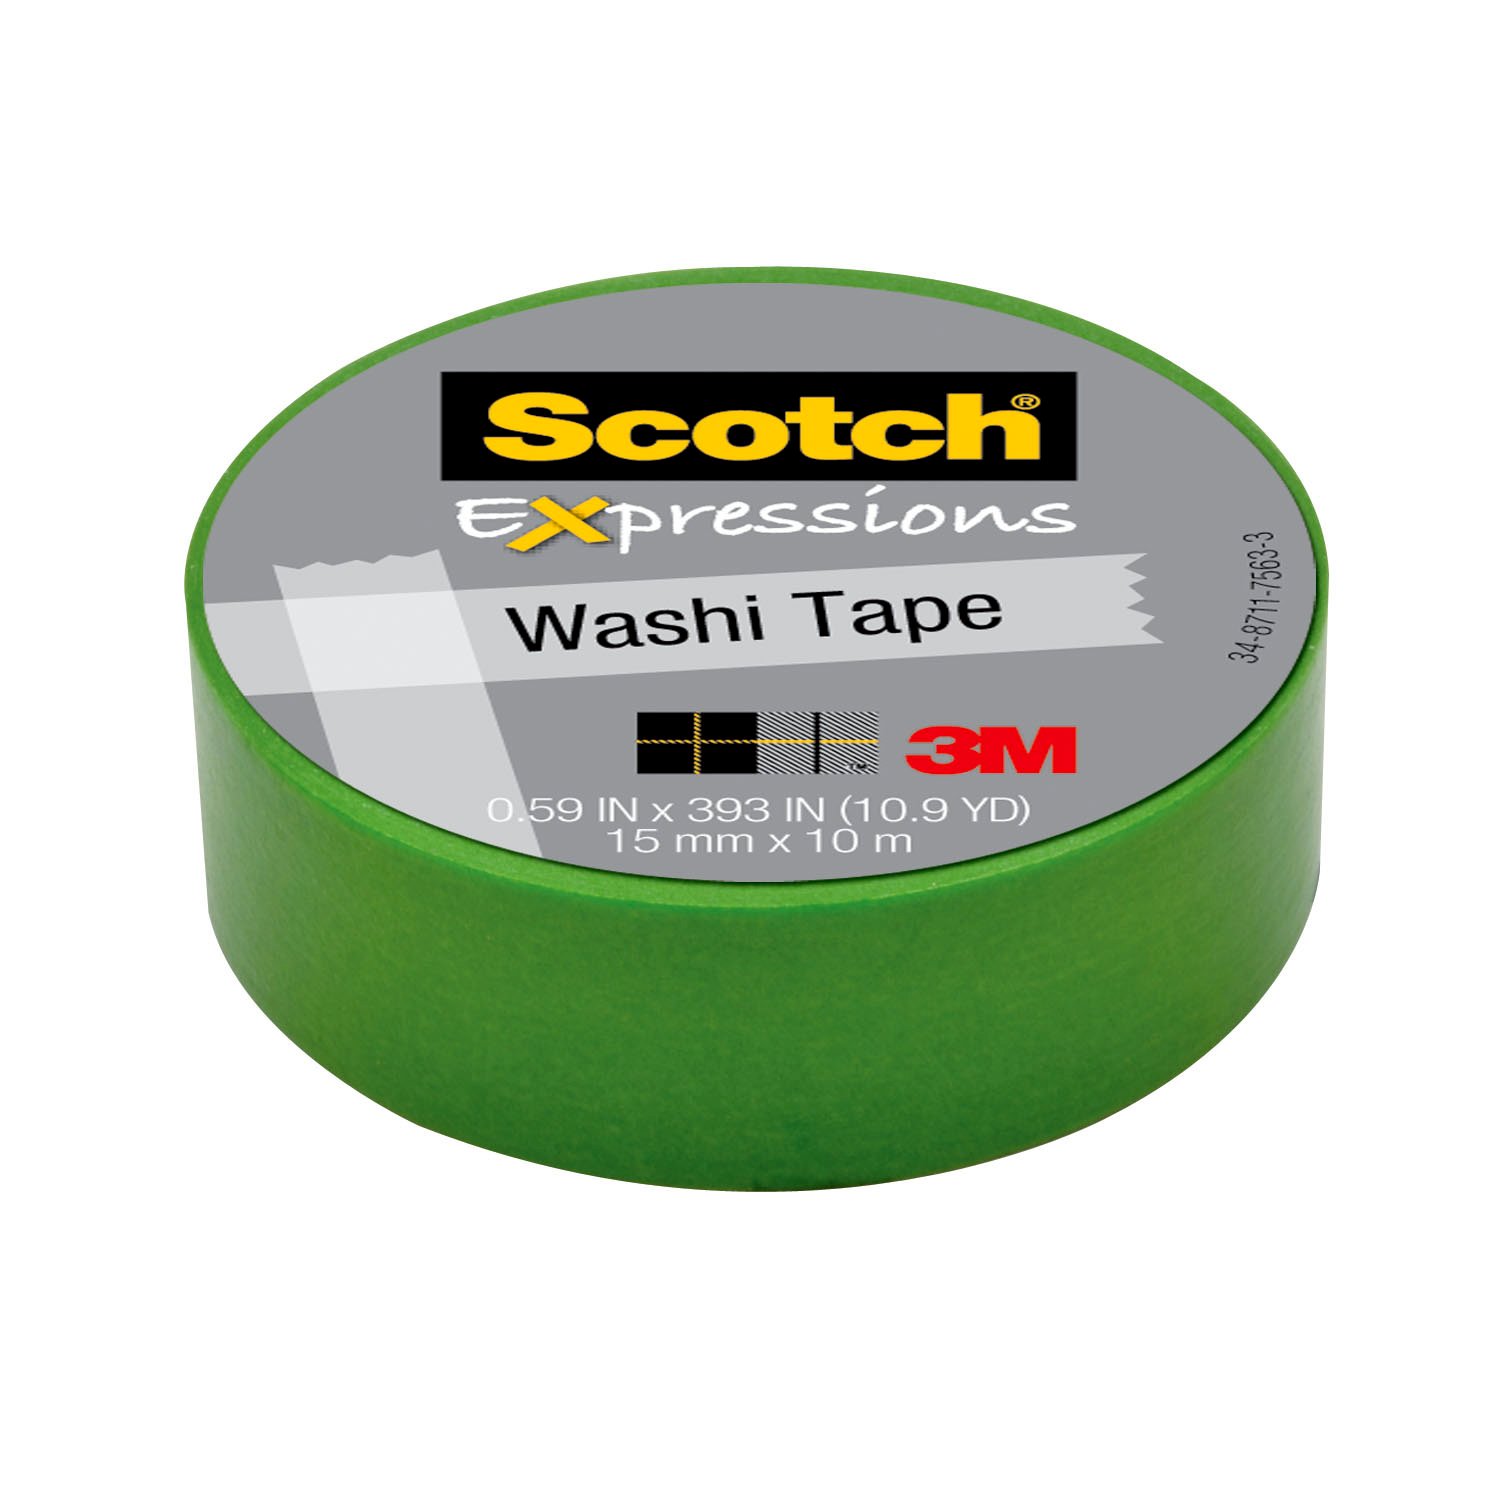 7100019517 - Scotch Expressions Washi Tape C314-GRN, .59 in x 393 in (15 mm x 10 m)
Green